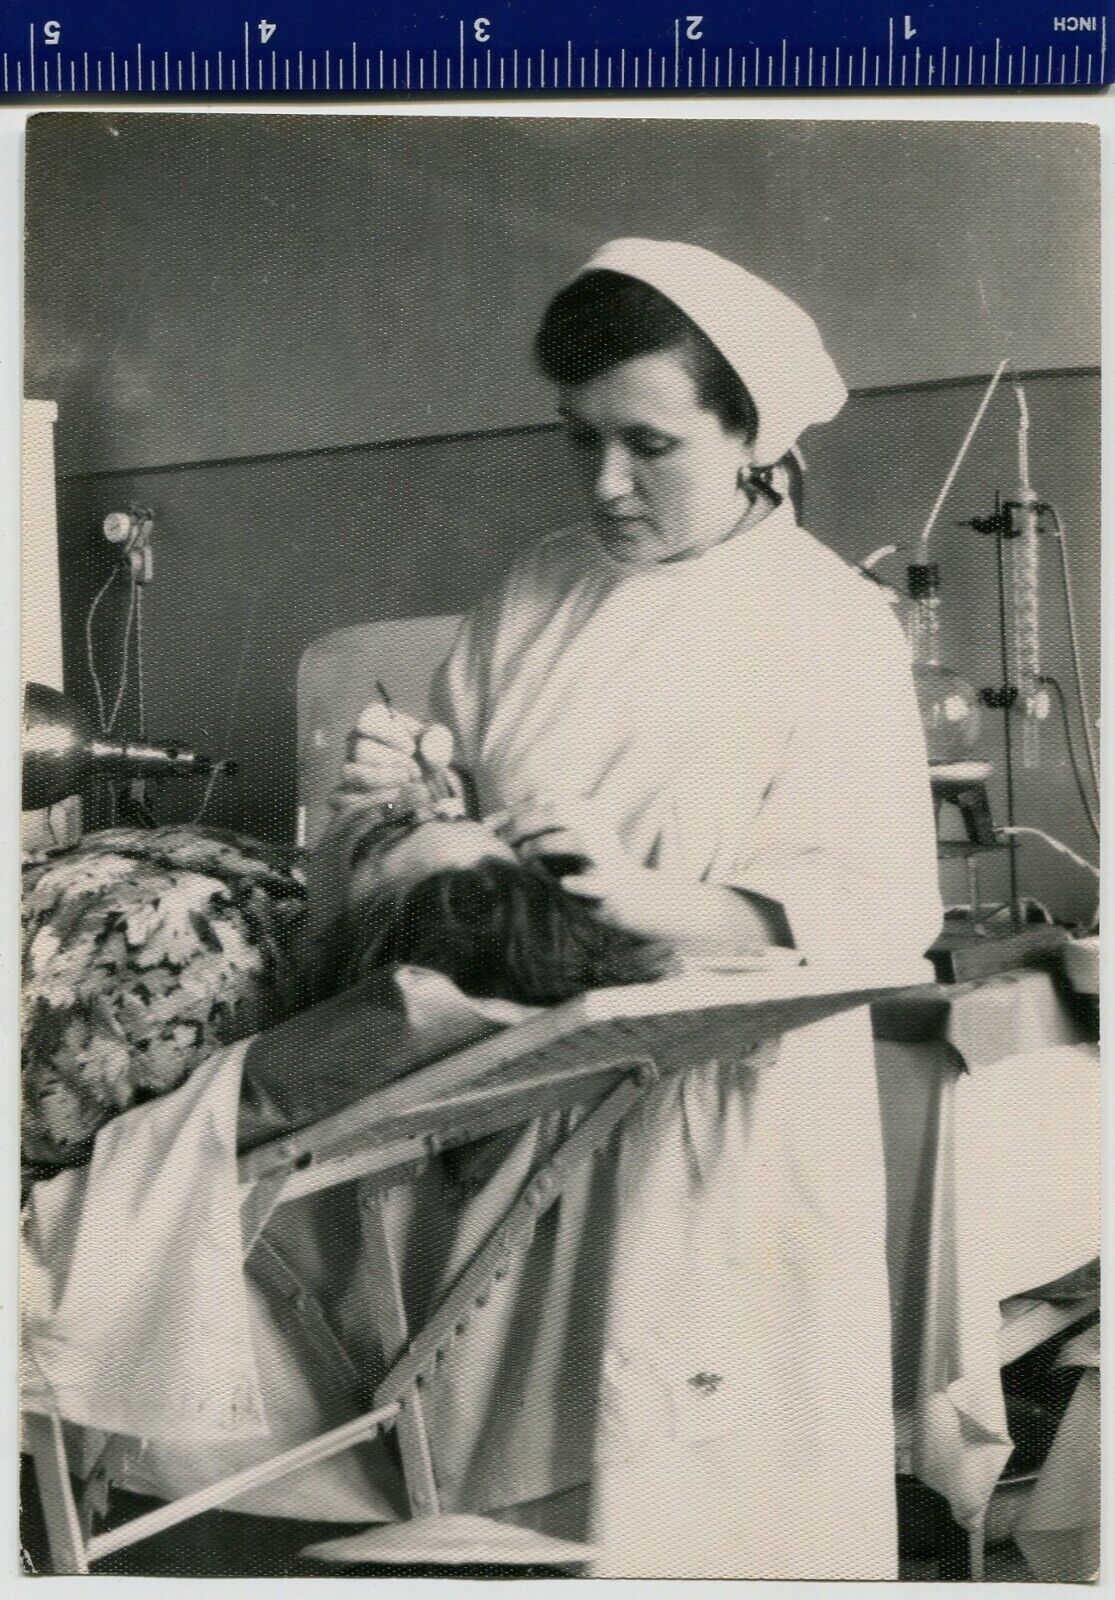 Vintage Photo USSR girl medic,doctor, cosmetic surgeon, eye surgery, uniform,70s